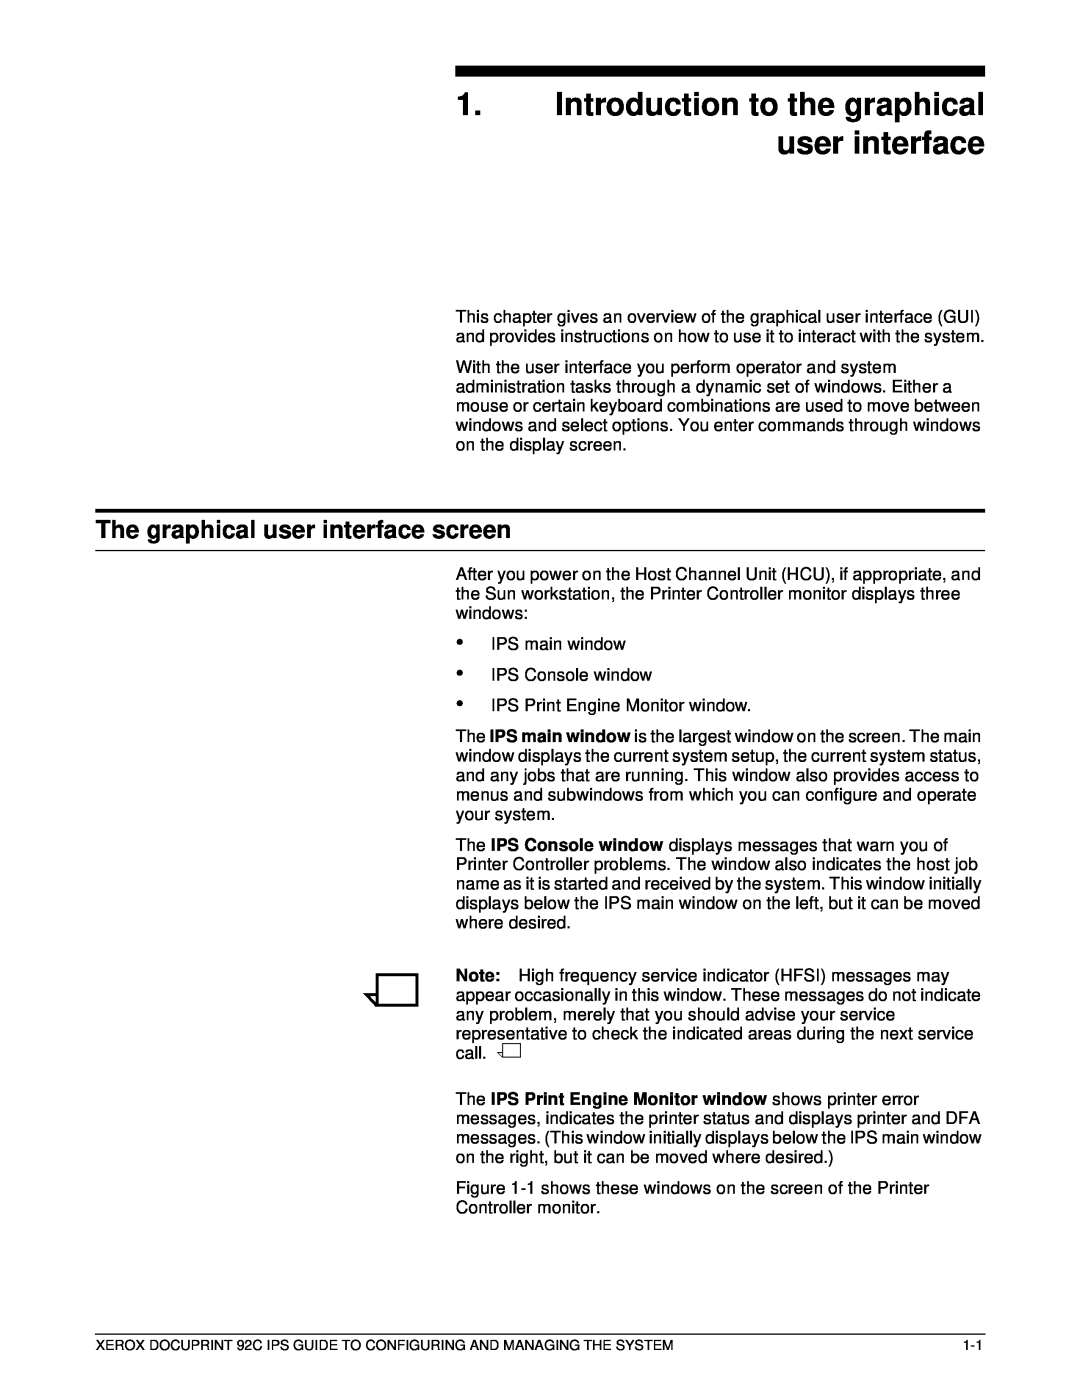 Xerox 92C IPS manual The graphical user interface screen, Introduction to the graphical user interface 